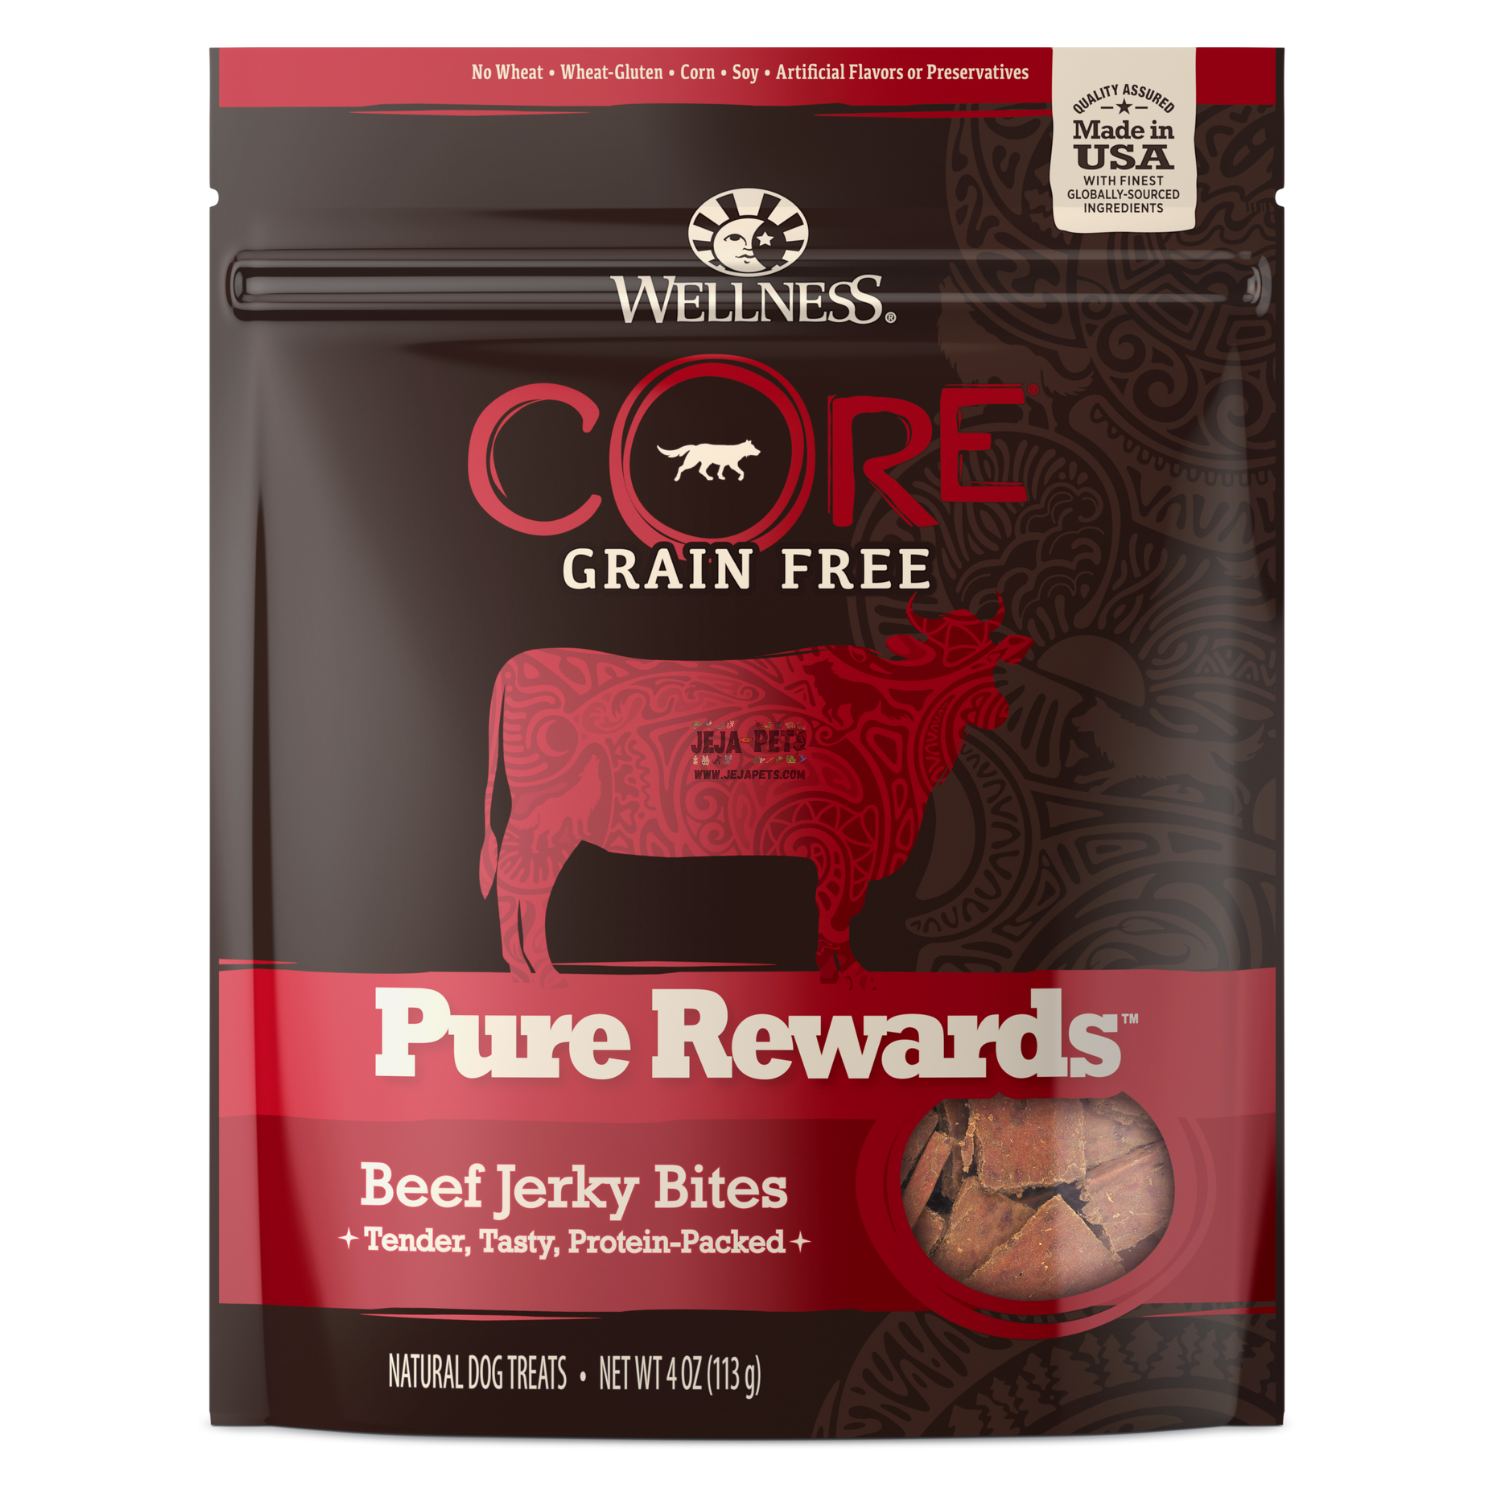 [DISCONTINUED] Wellness CORE Pure Rewards Beef Jerky Bites - 113g